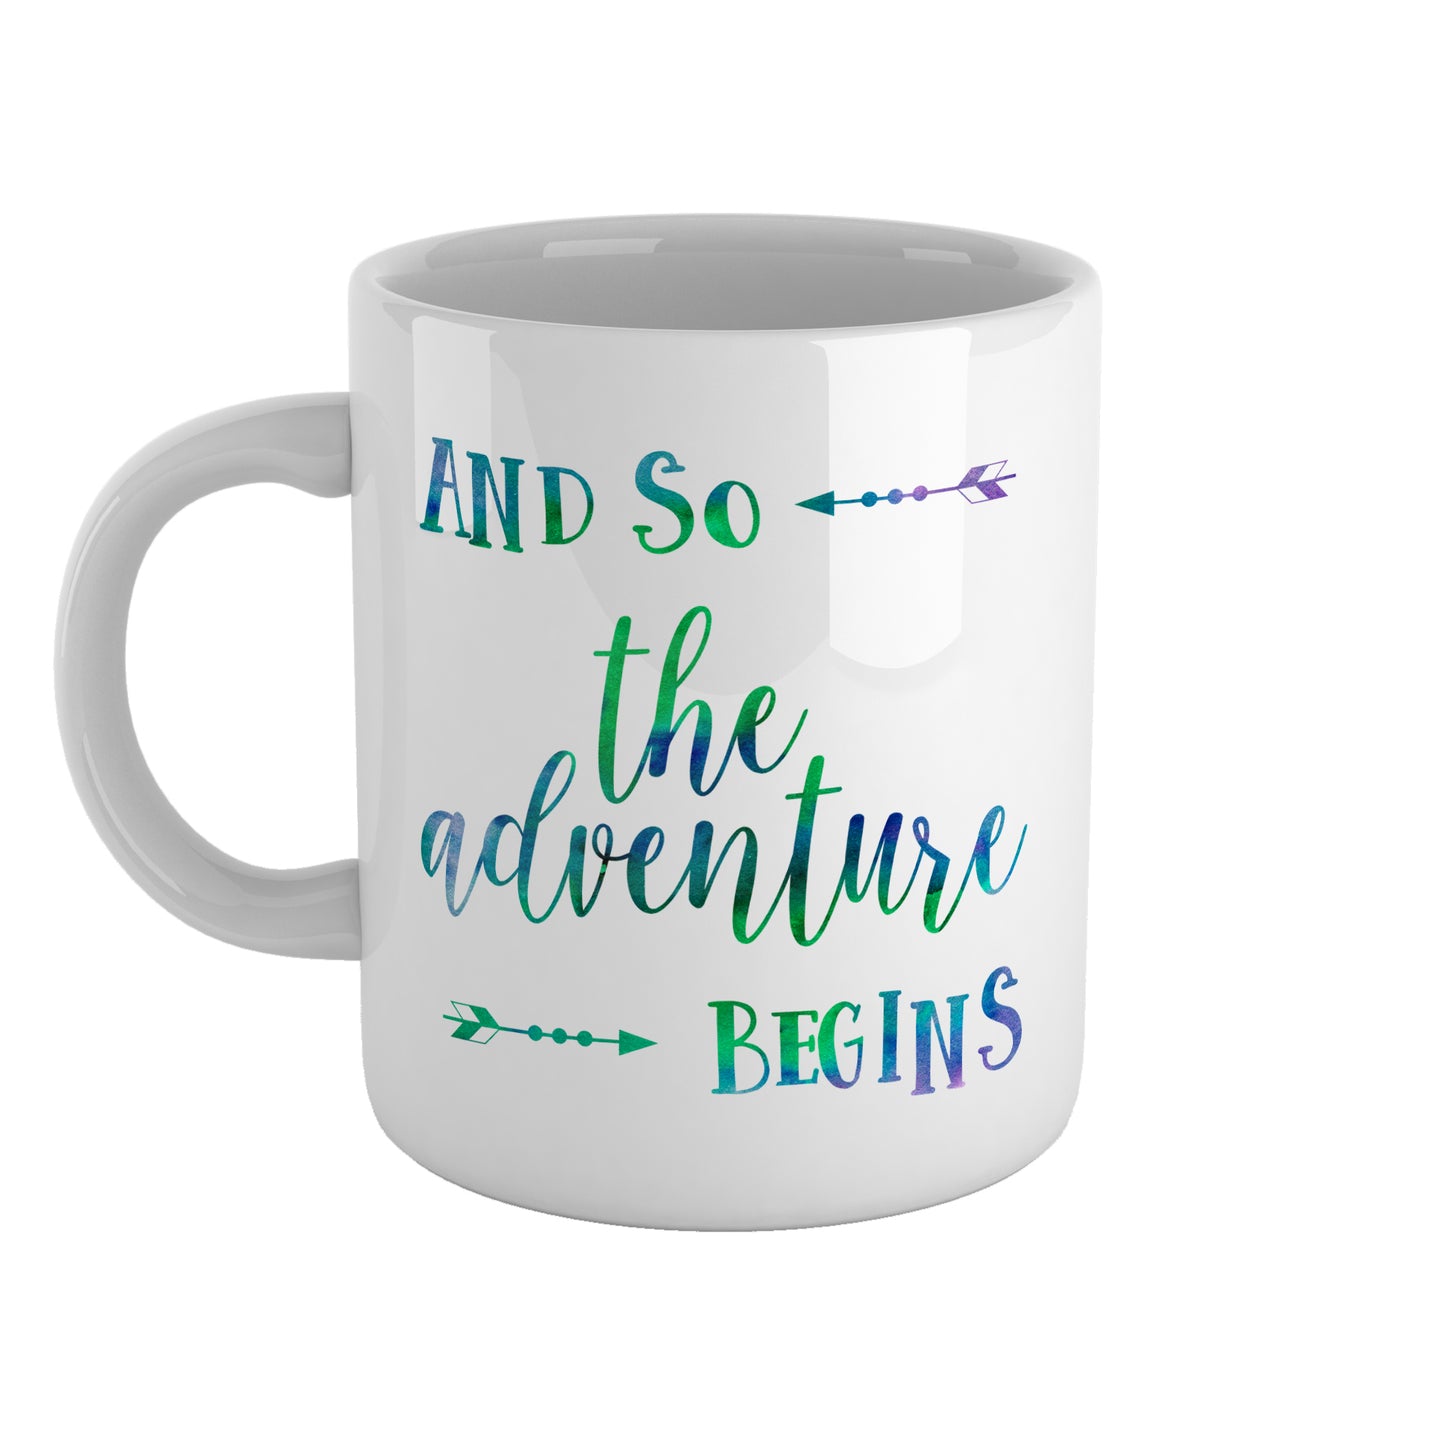 And so the adventure begins | Ceramic mug